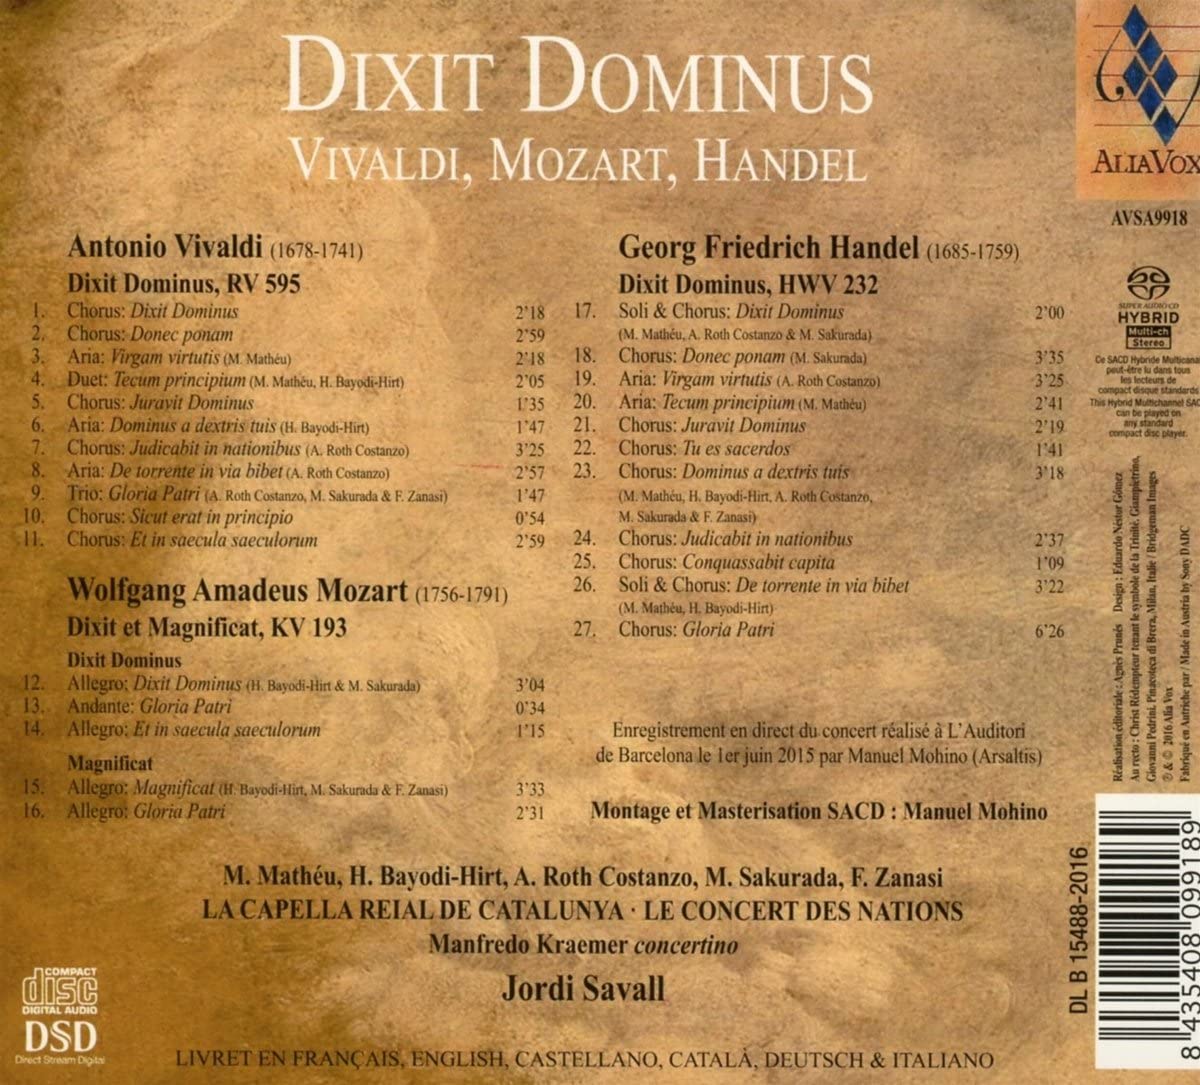 Vivaldi, Mozart, Handel: Dixit Dominus - slide-1